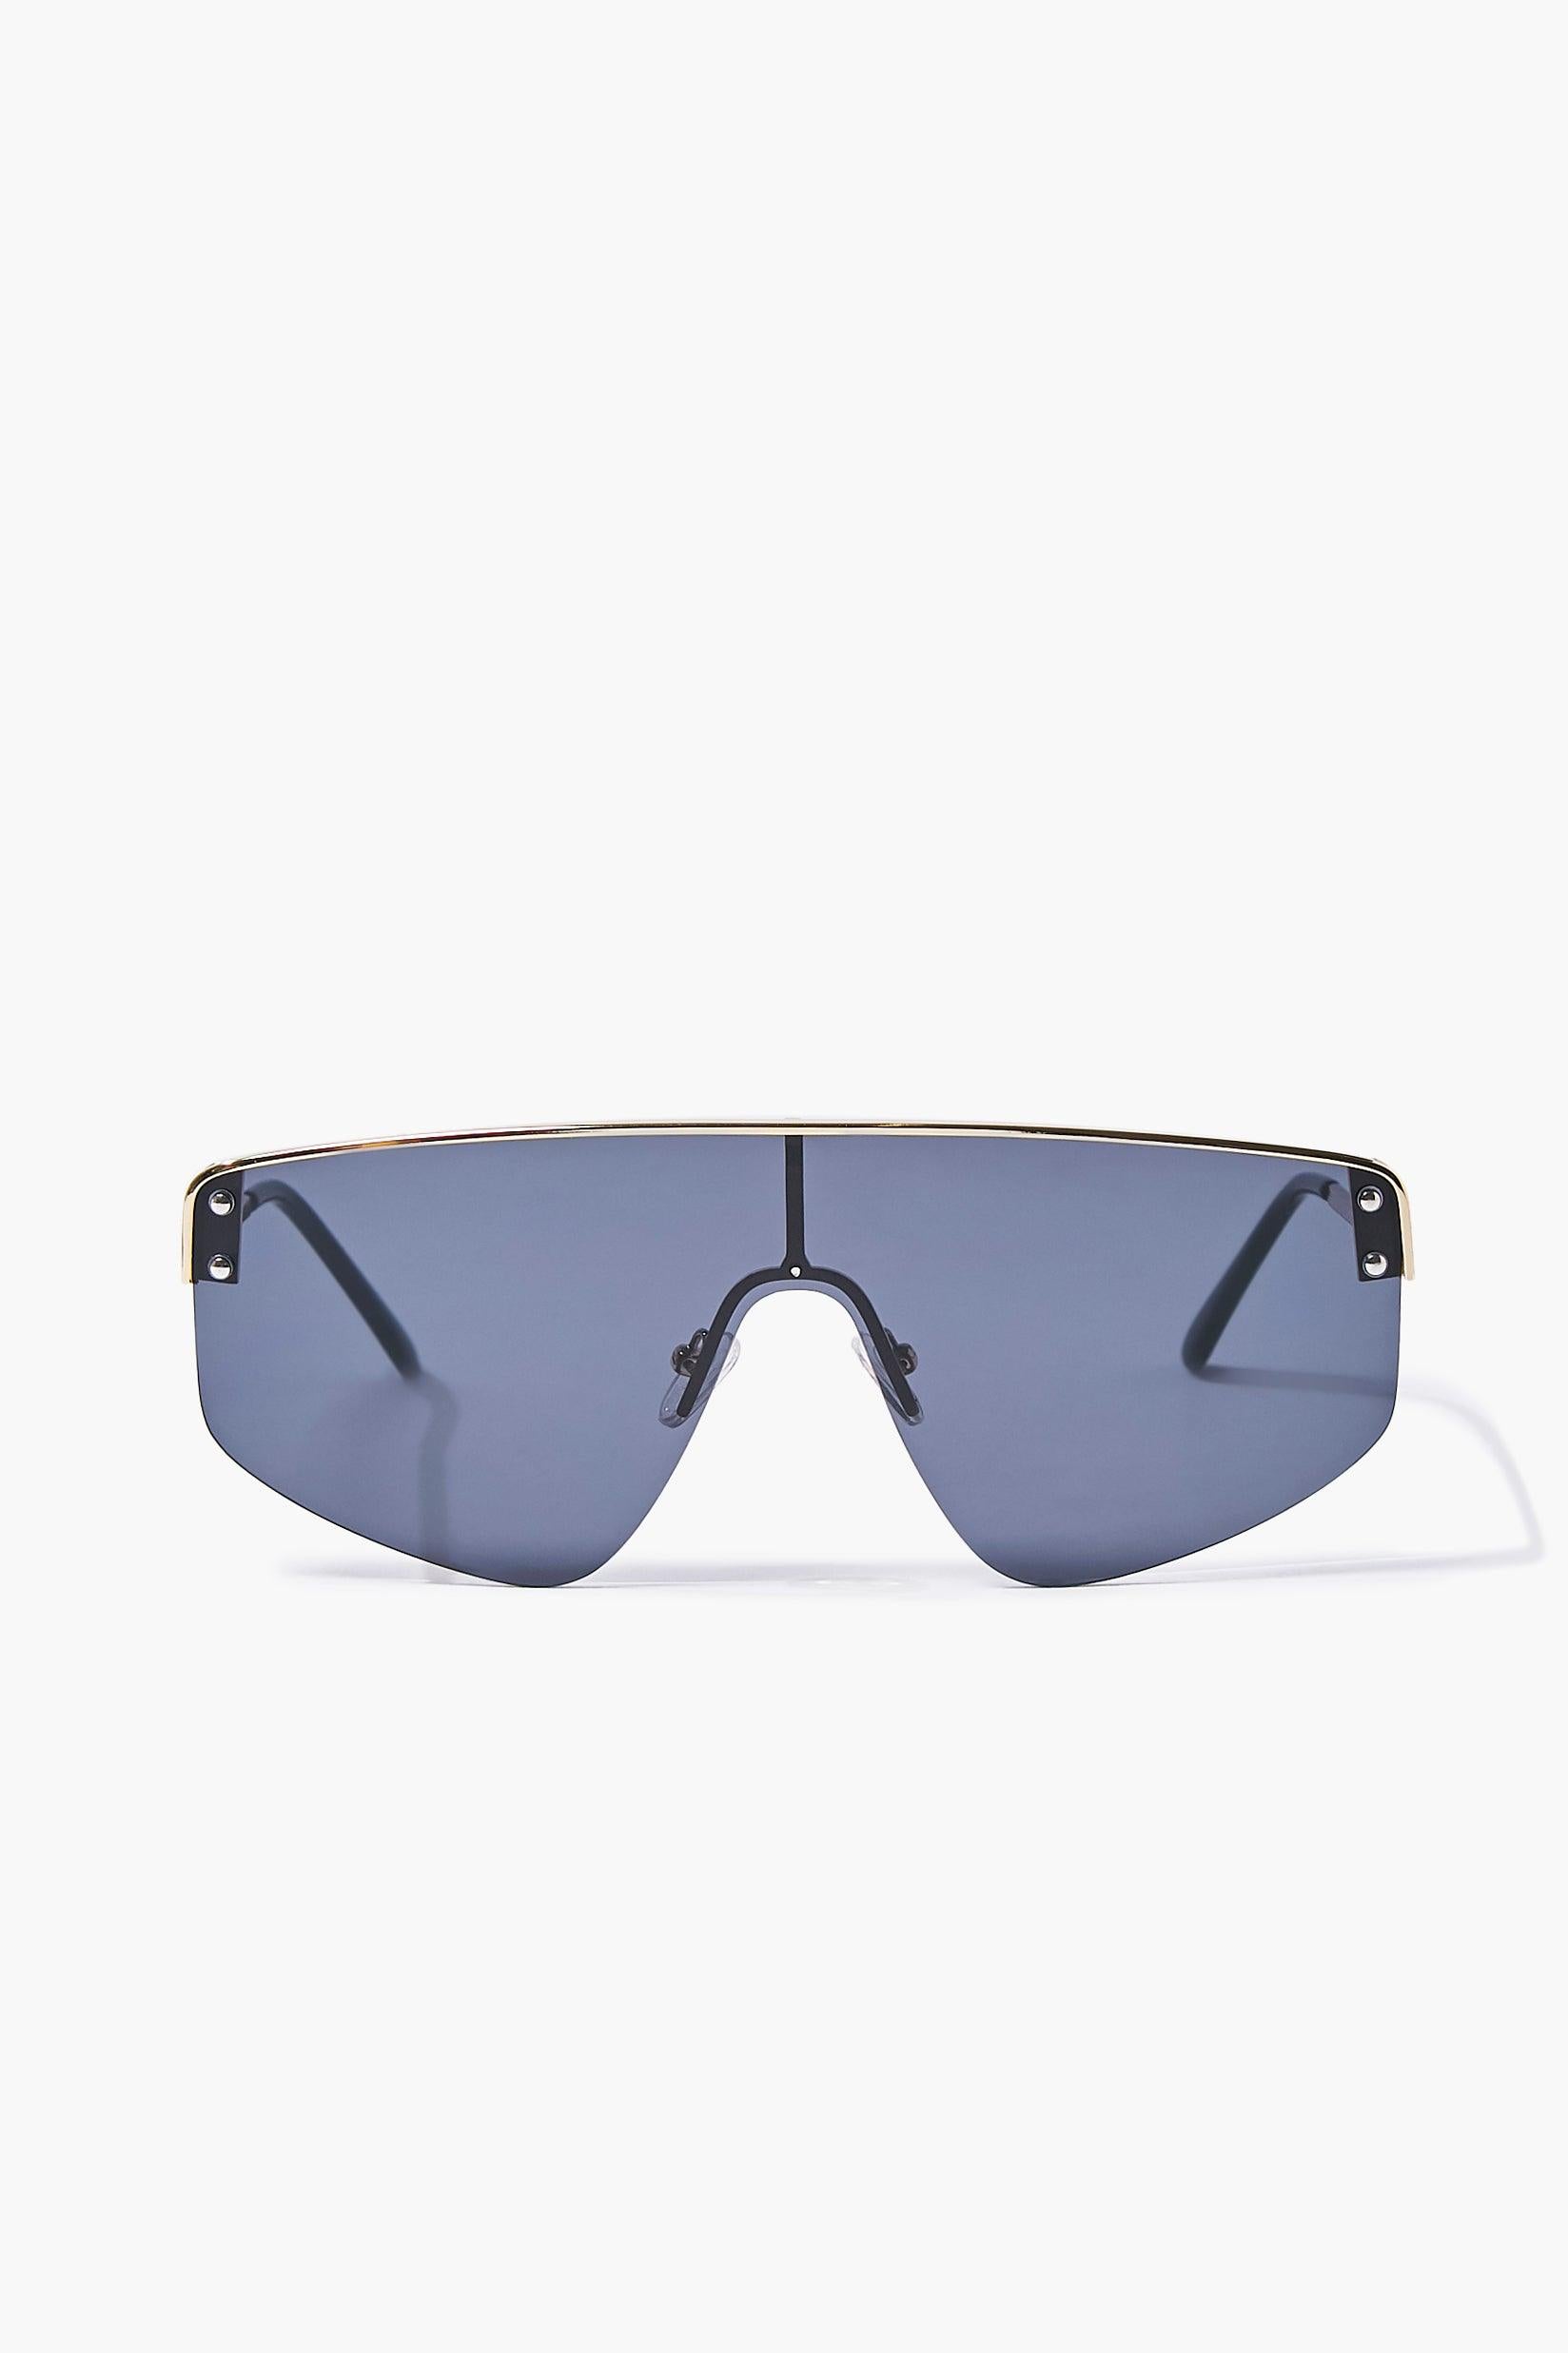 Goldblack Bar-Accent Shield Sunglasses  2